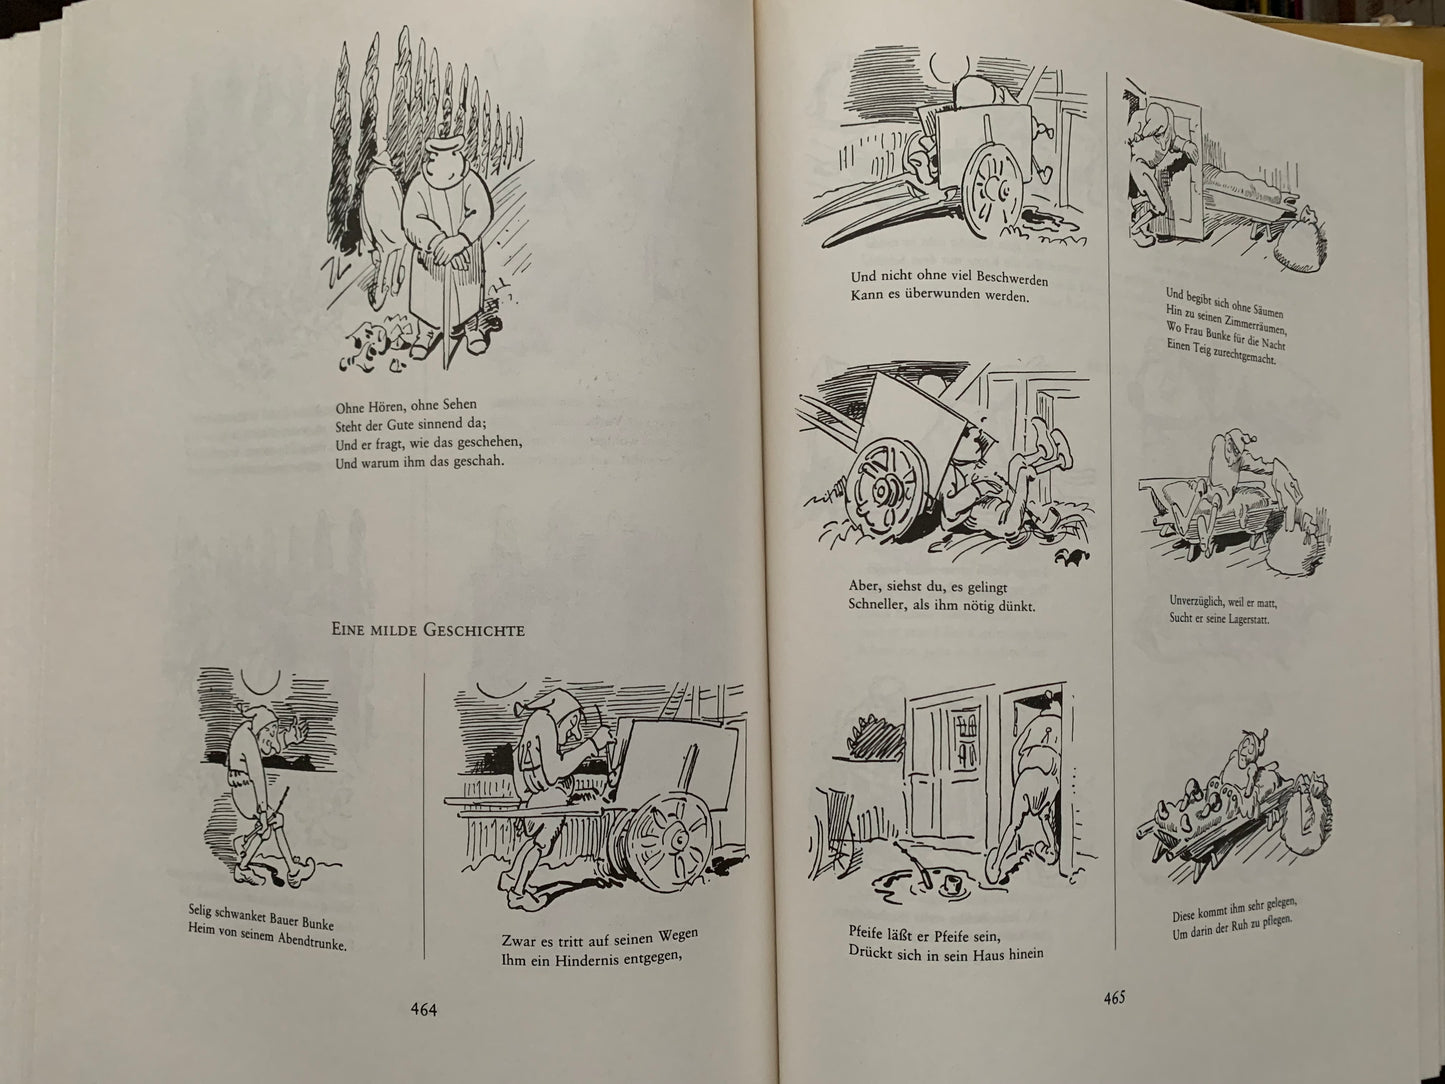 Vintage comic satire book in German - "Das dicke BUSCH-BUCH" - A thick Joke Book - Wolfgang Teichmann - Printed in DDR / GDR - 1981